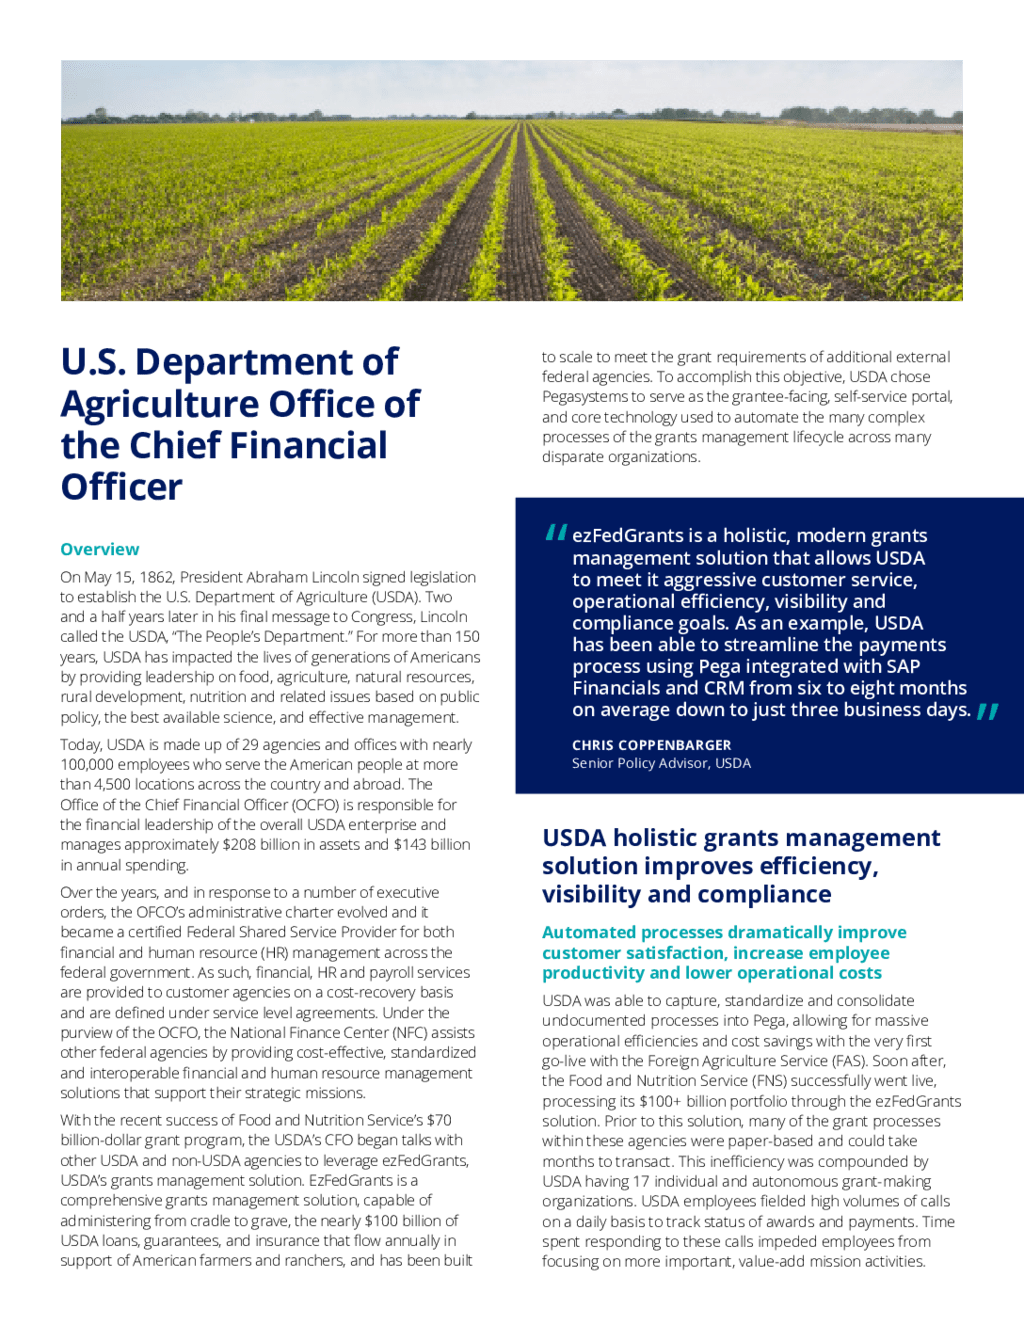 USDA’s holistic grants management solution